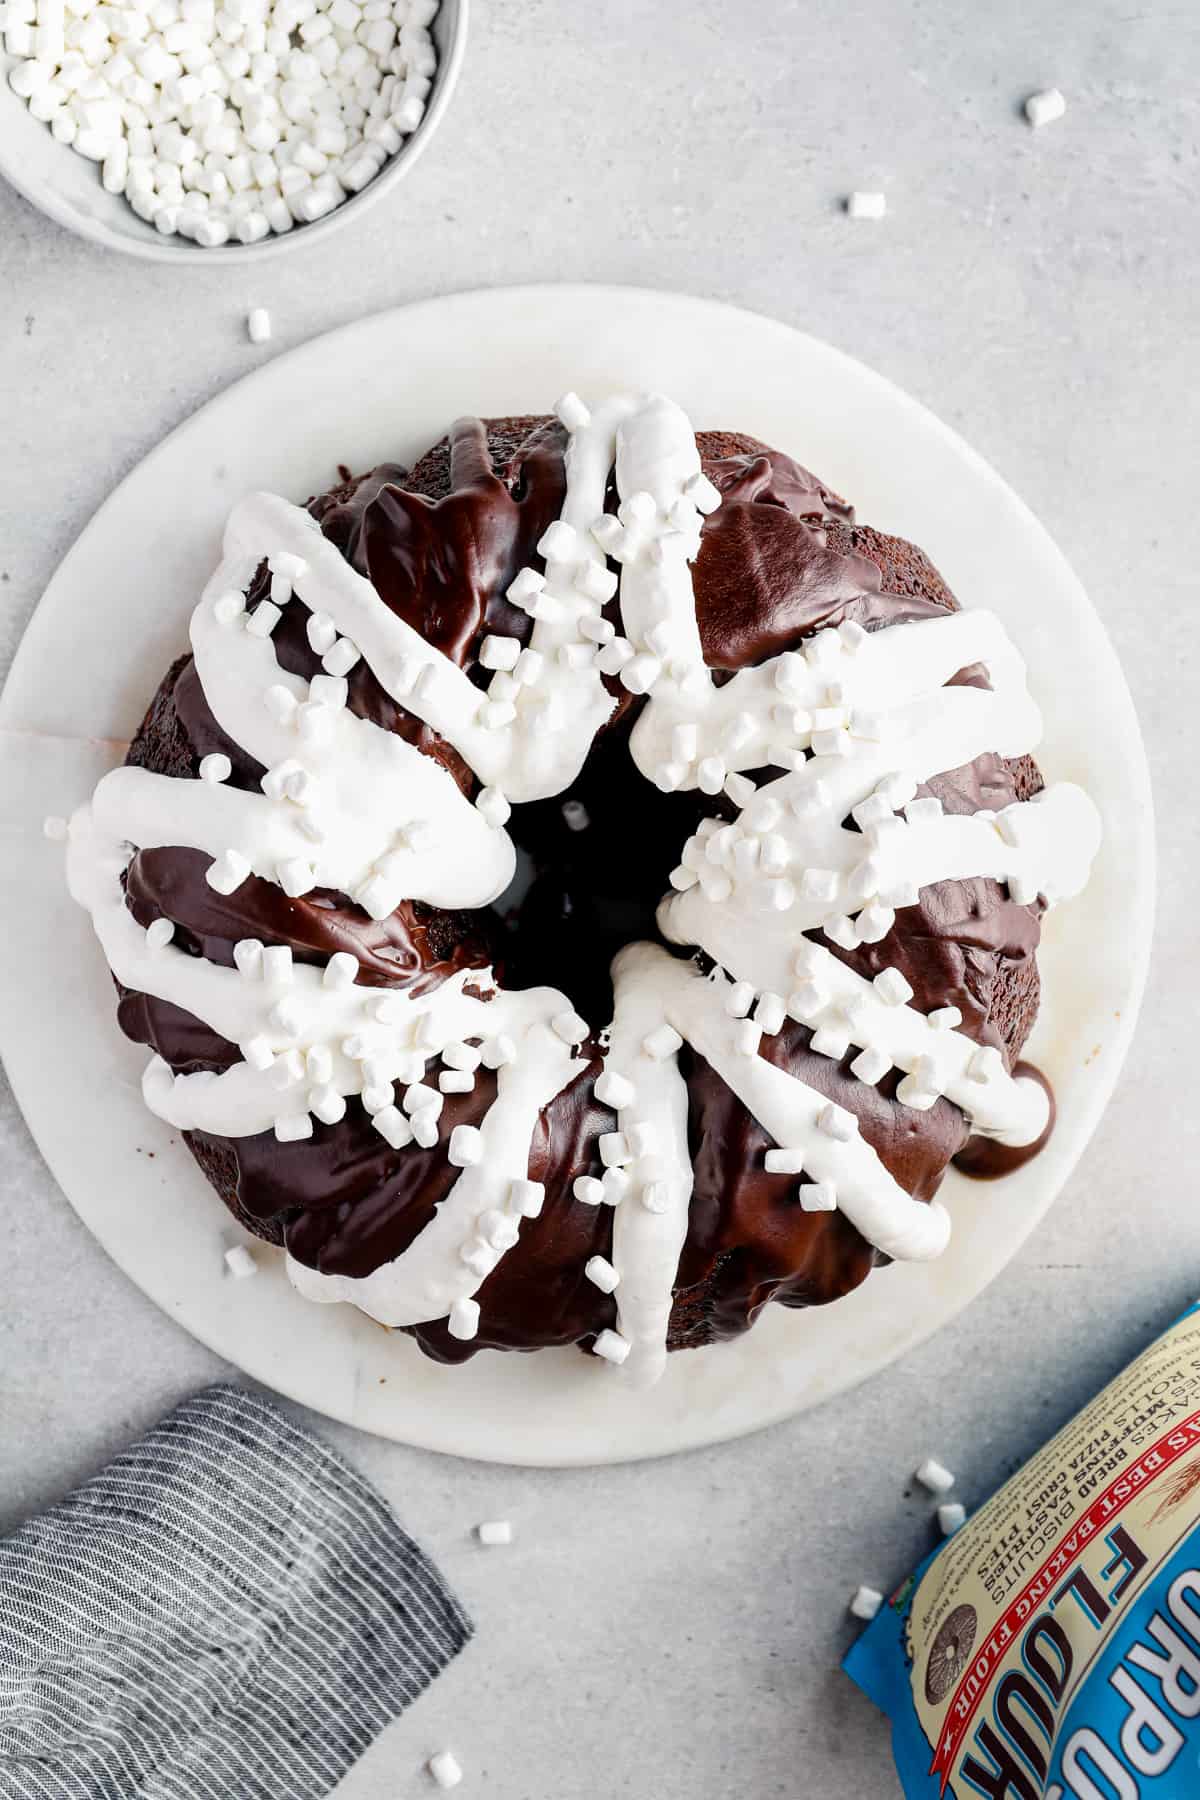 https://www.thecookierookie.com/wp-content/uploads/2021/12/hot-chocolate-bundt-cake-recipe.jpg